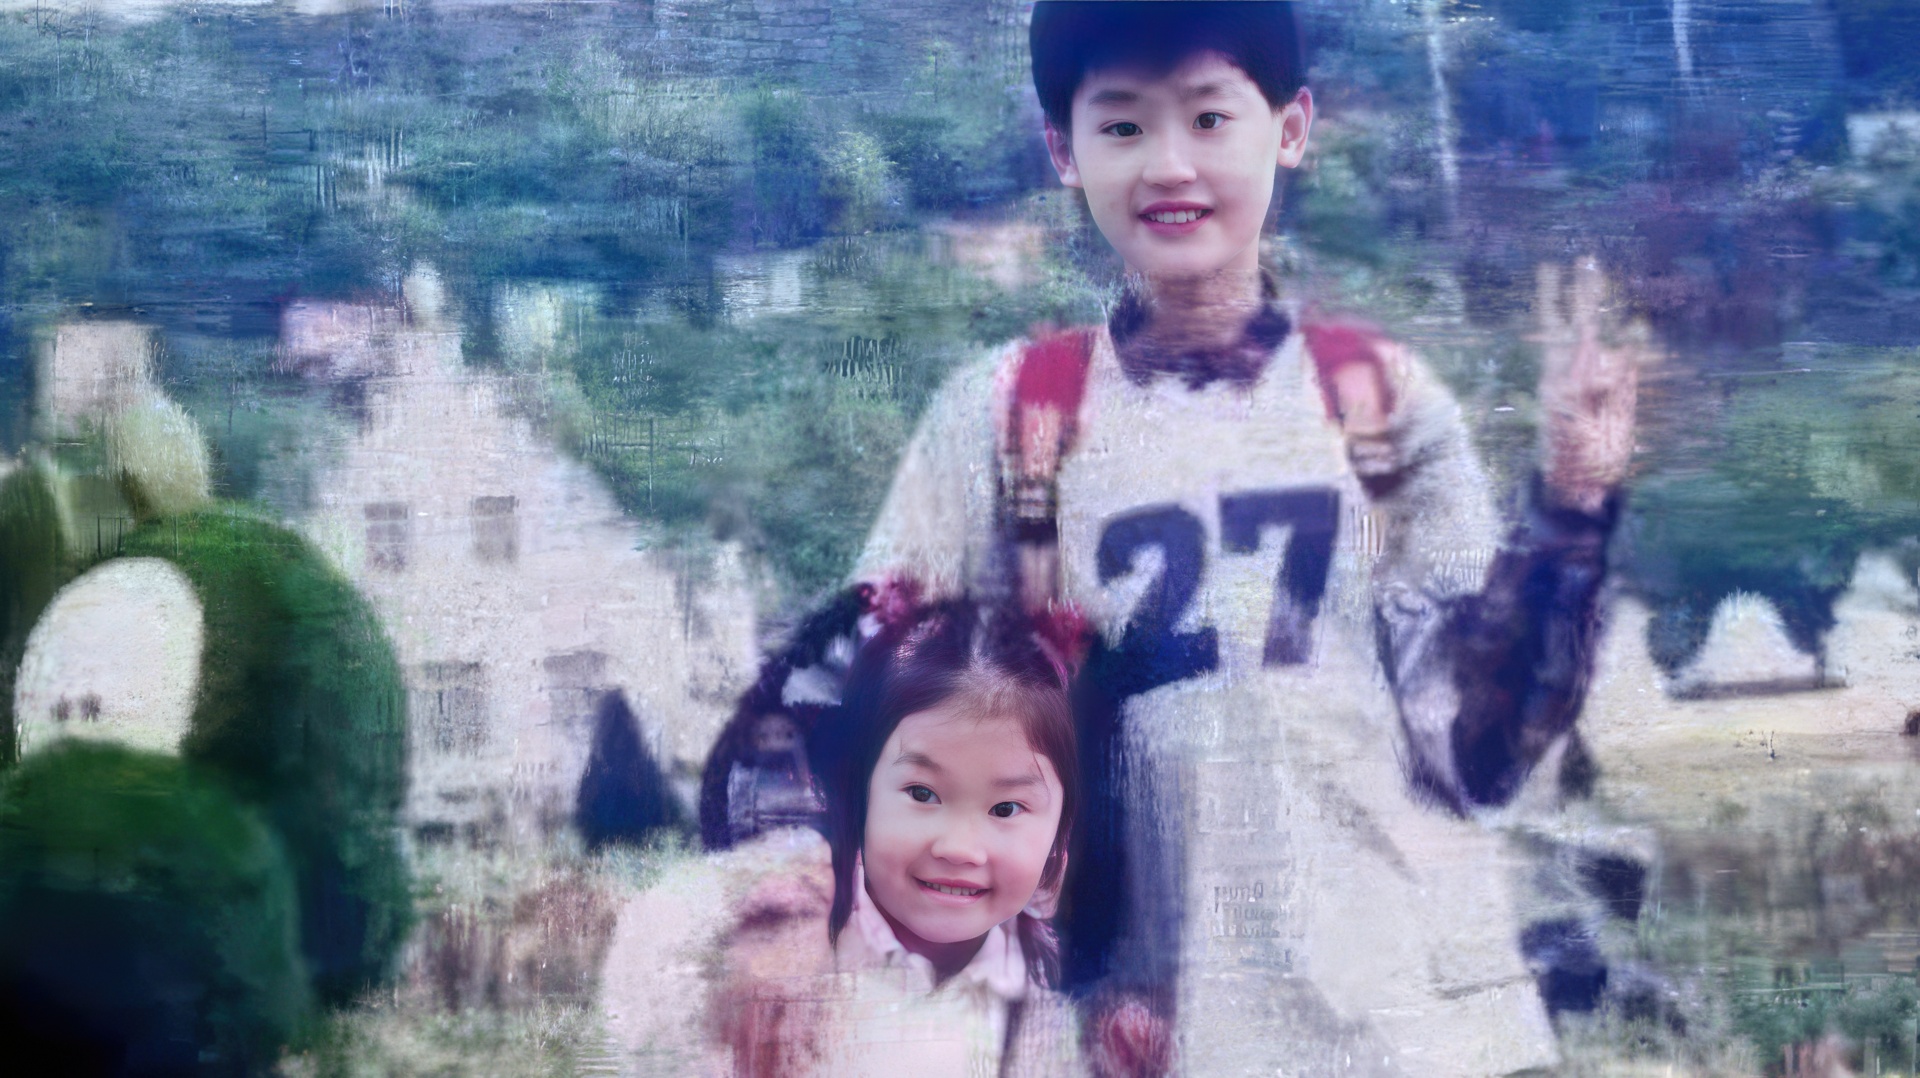 Lee Jong-suk with his sister